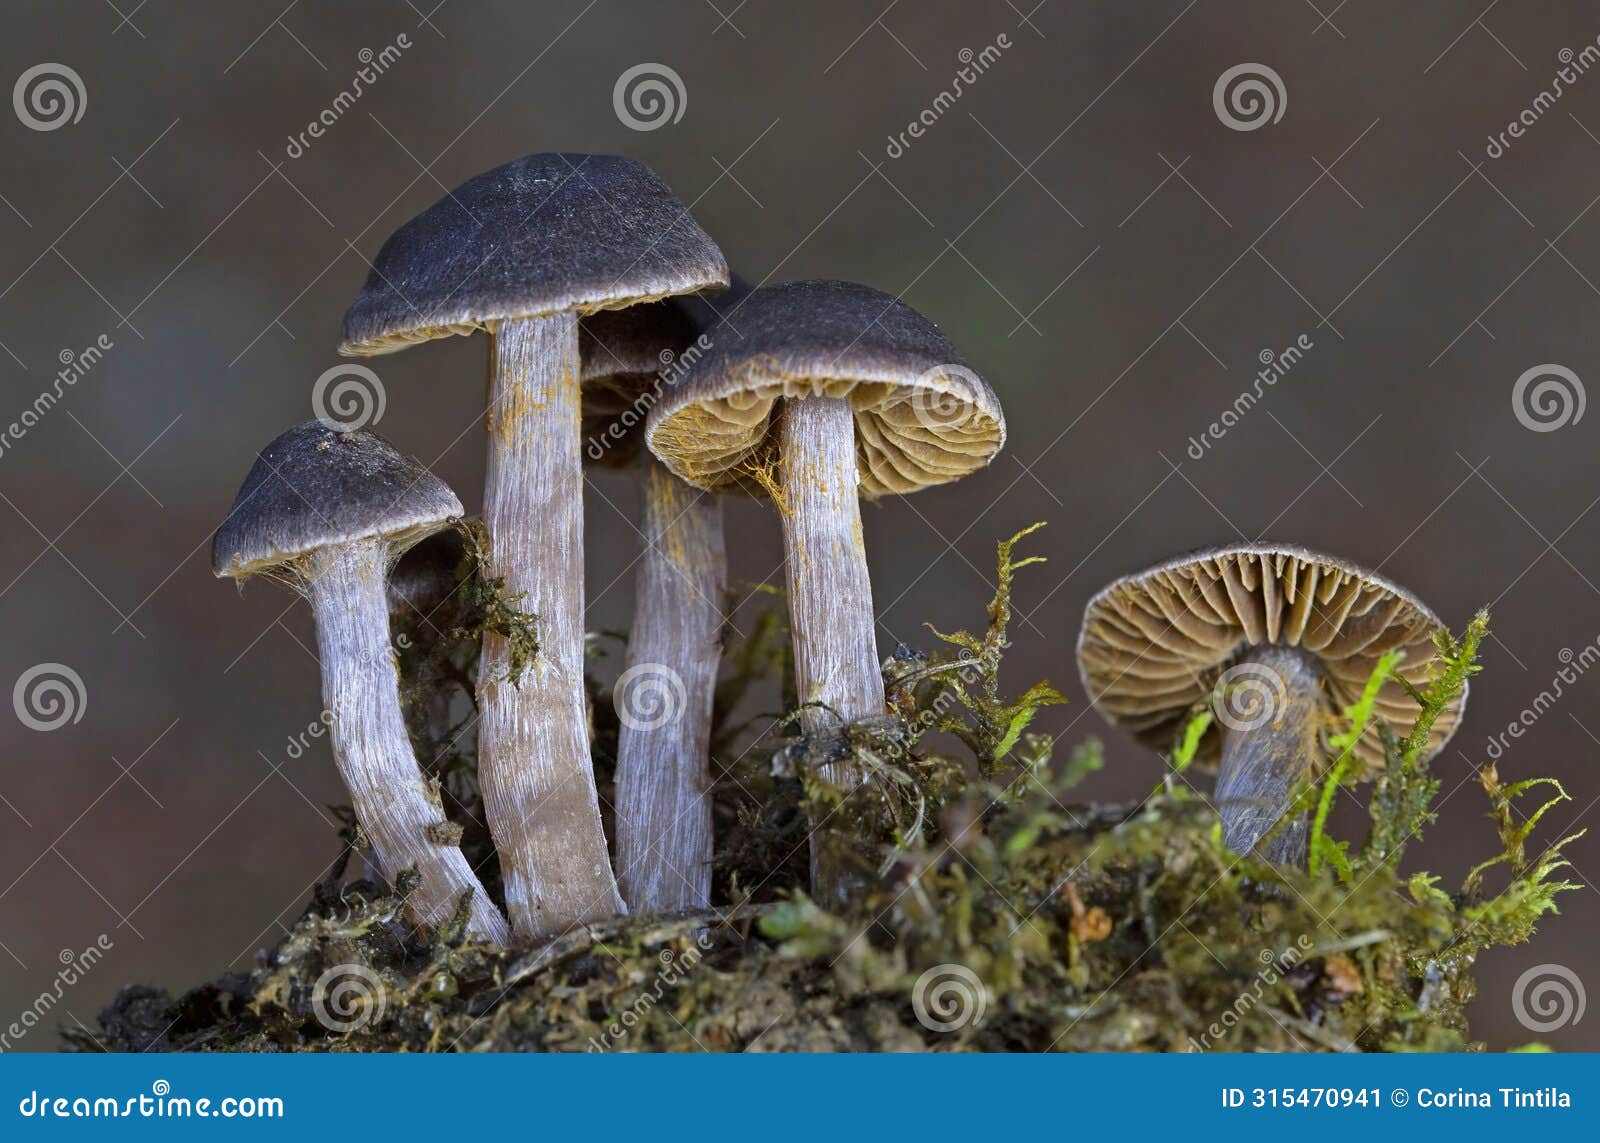 cortinarius brunneus is a species of fungi in the family cortinariaceae.